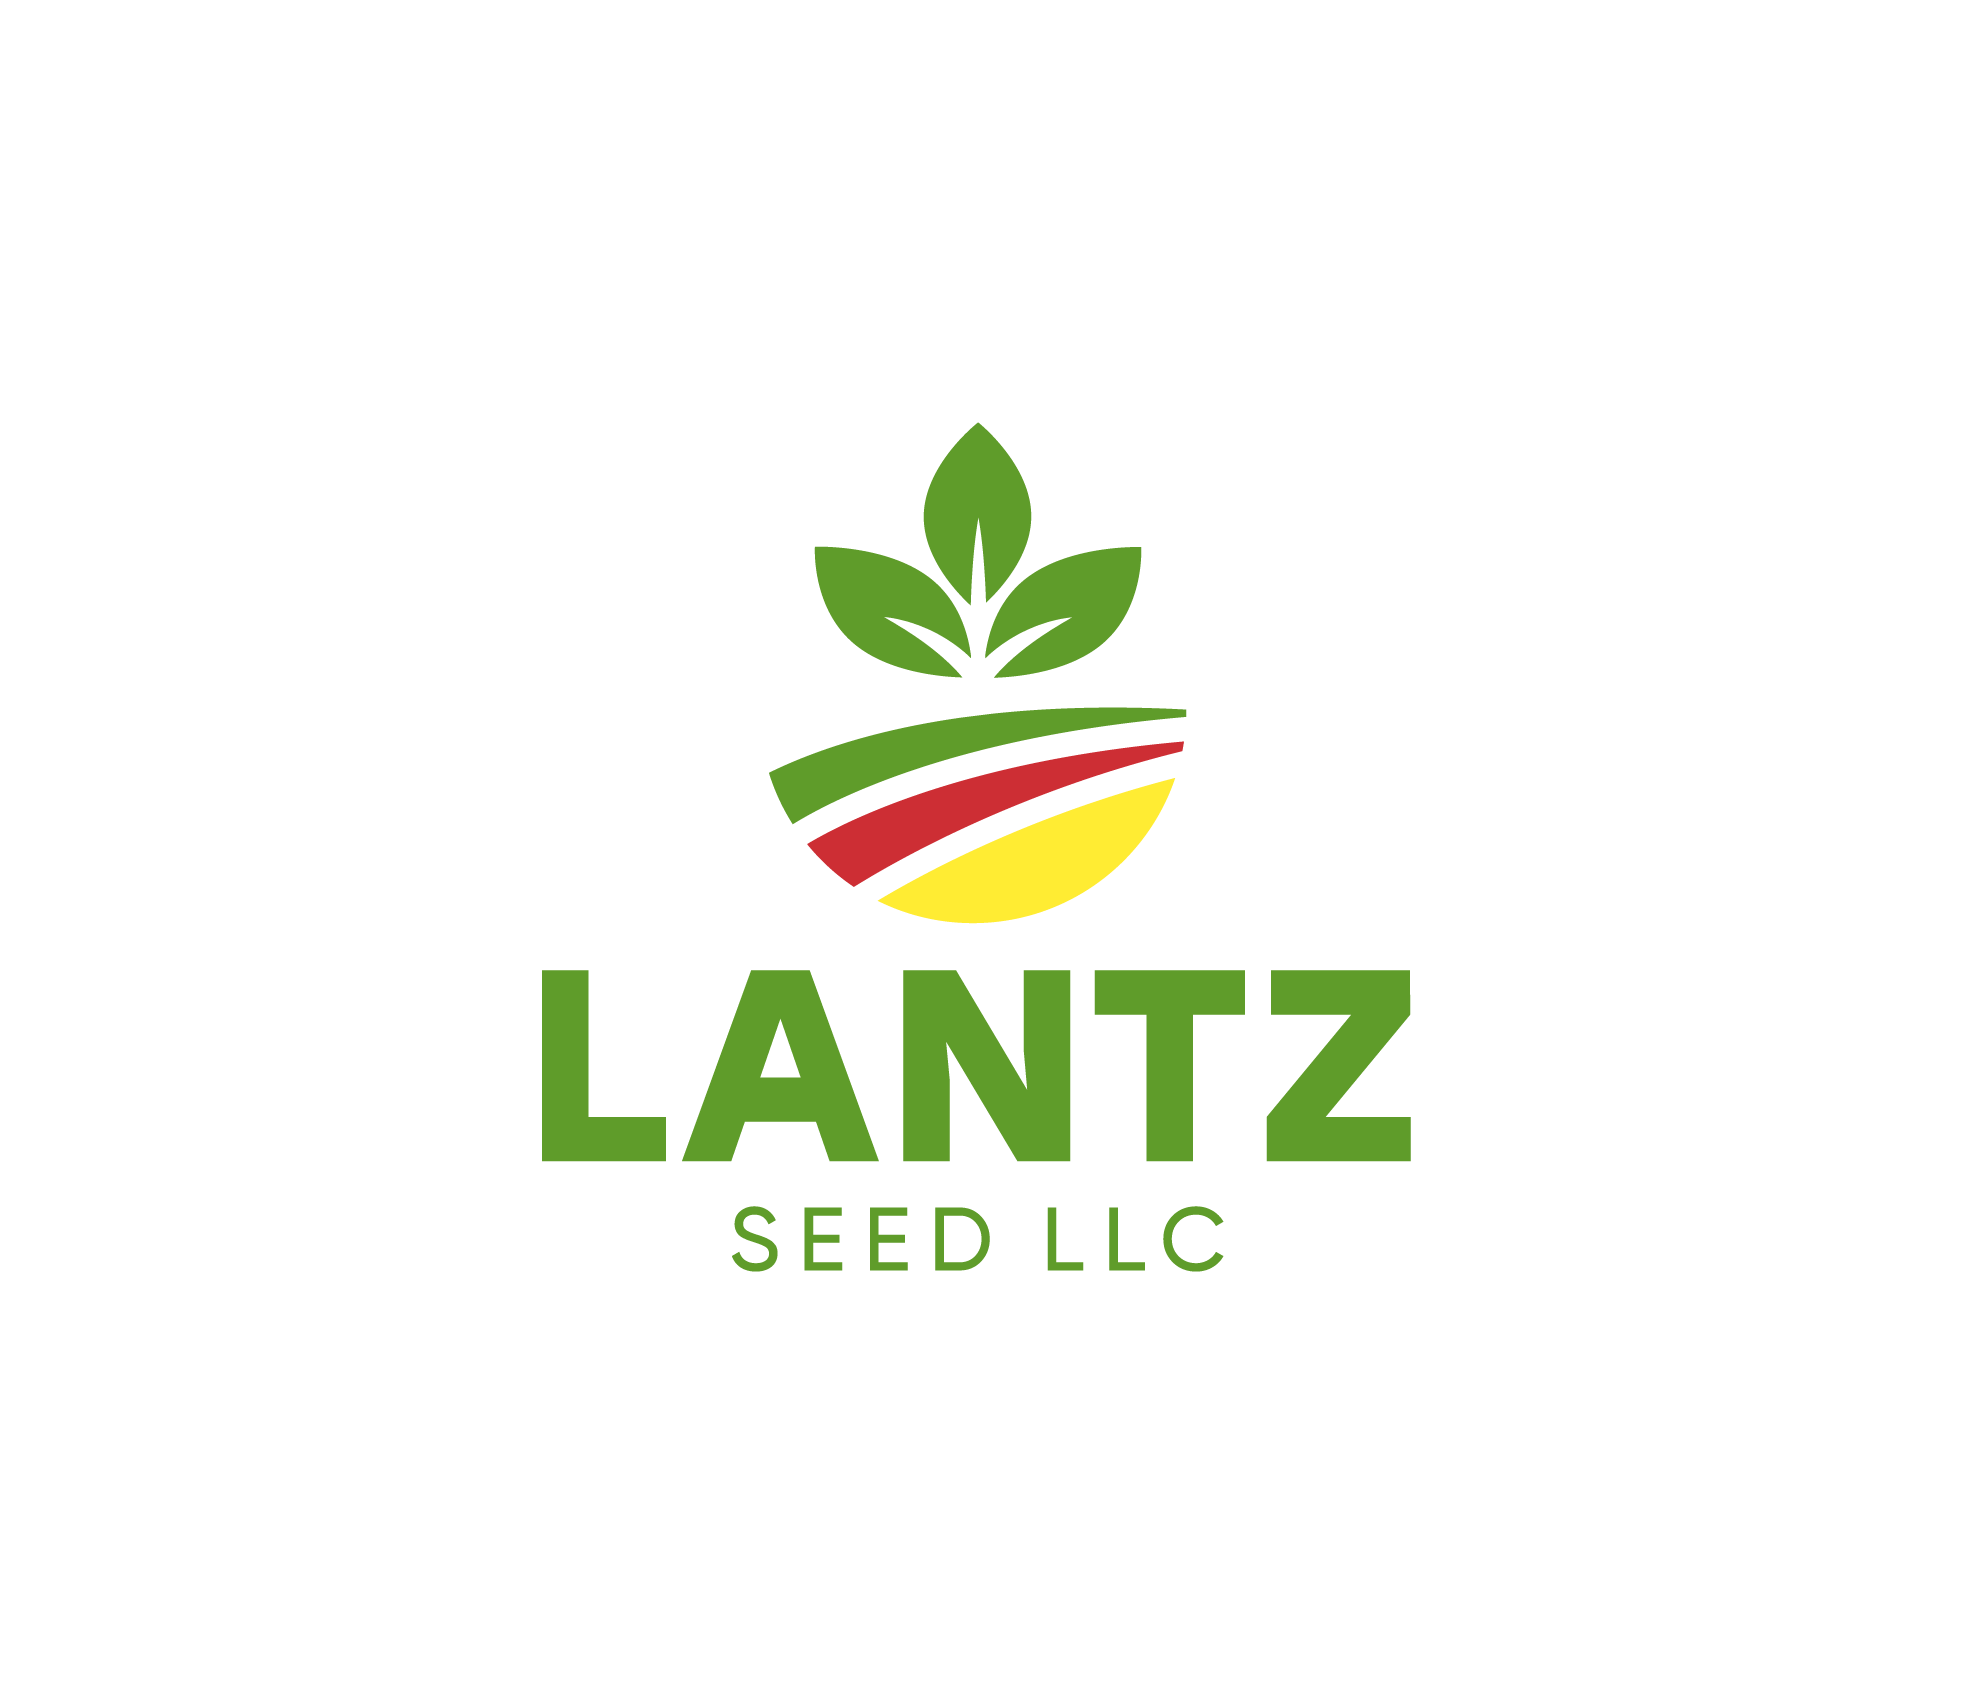 Lantz Seed